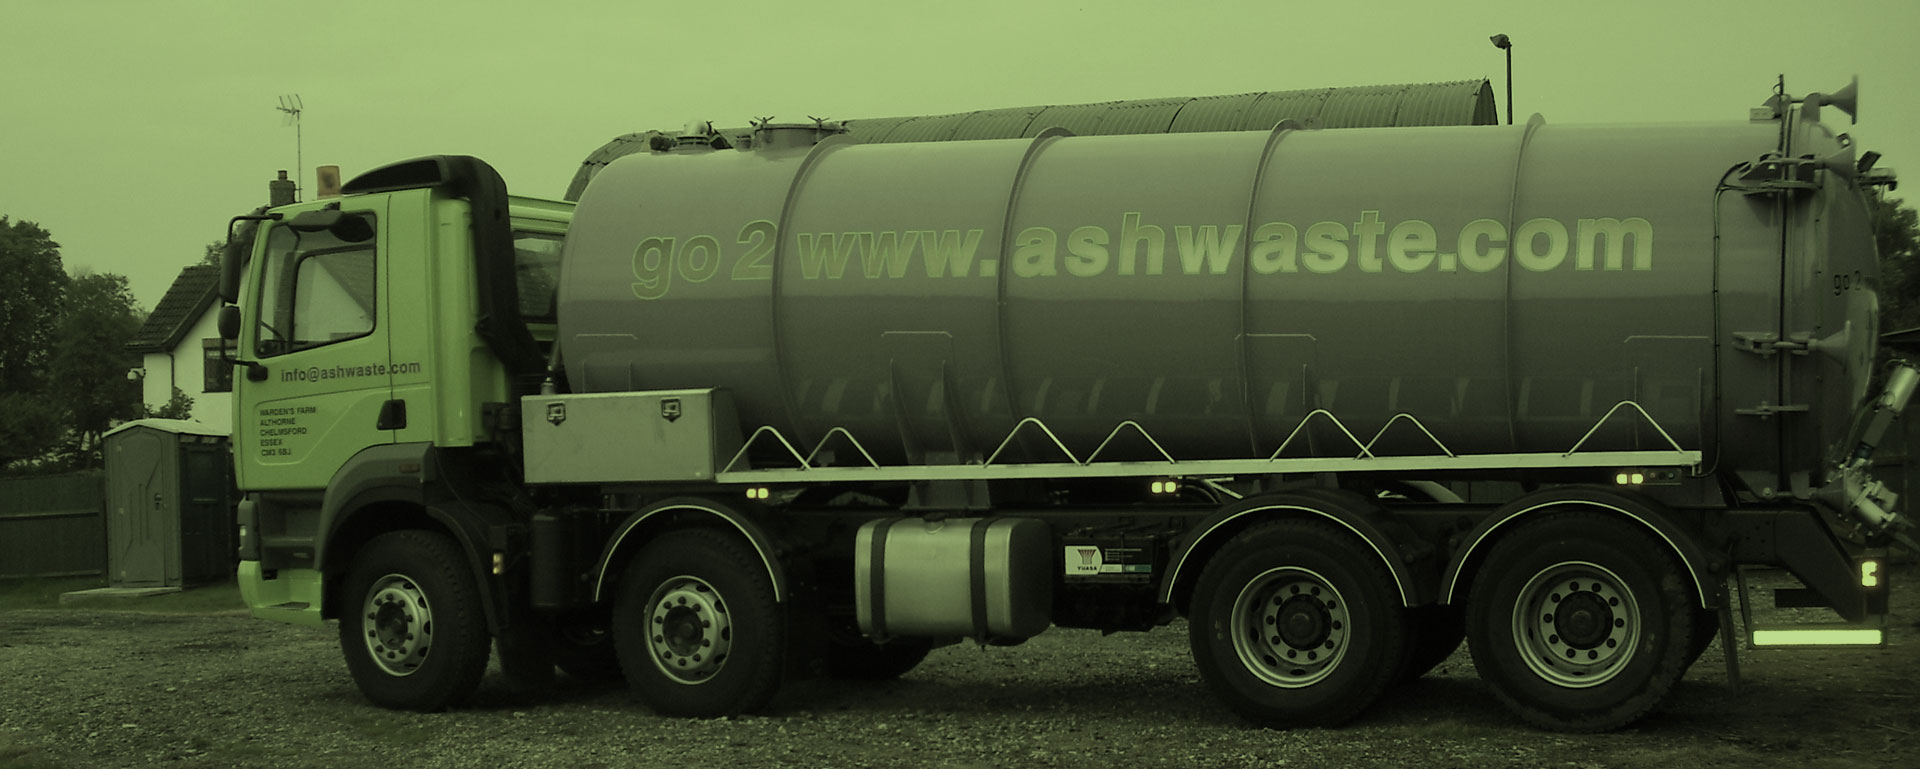 Main image for Ashwaste Environmental Ltd